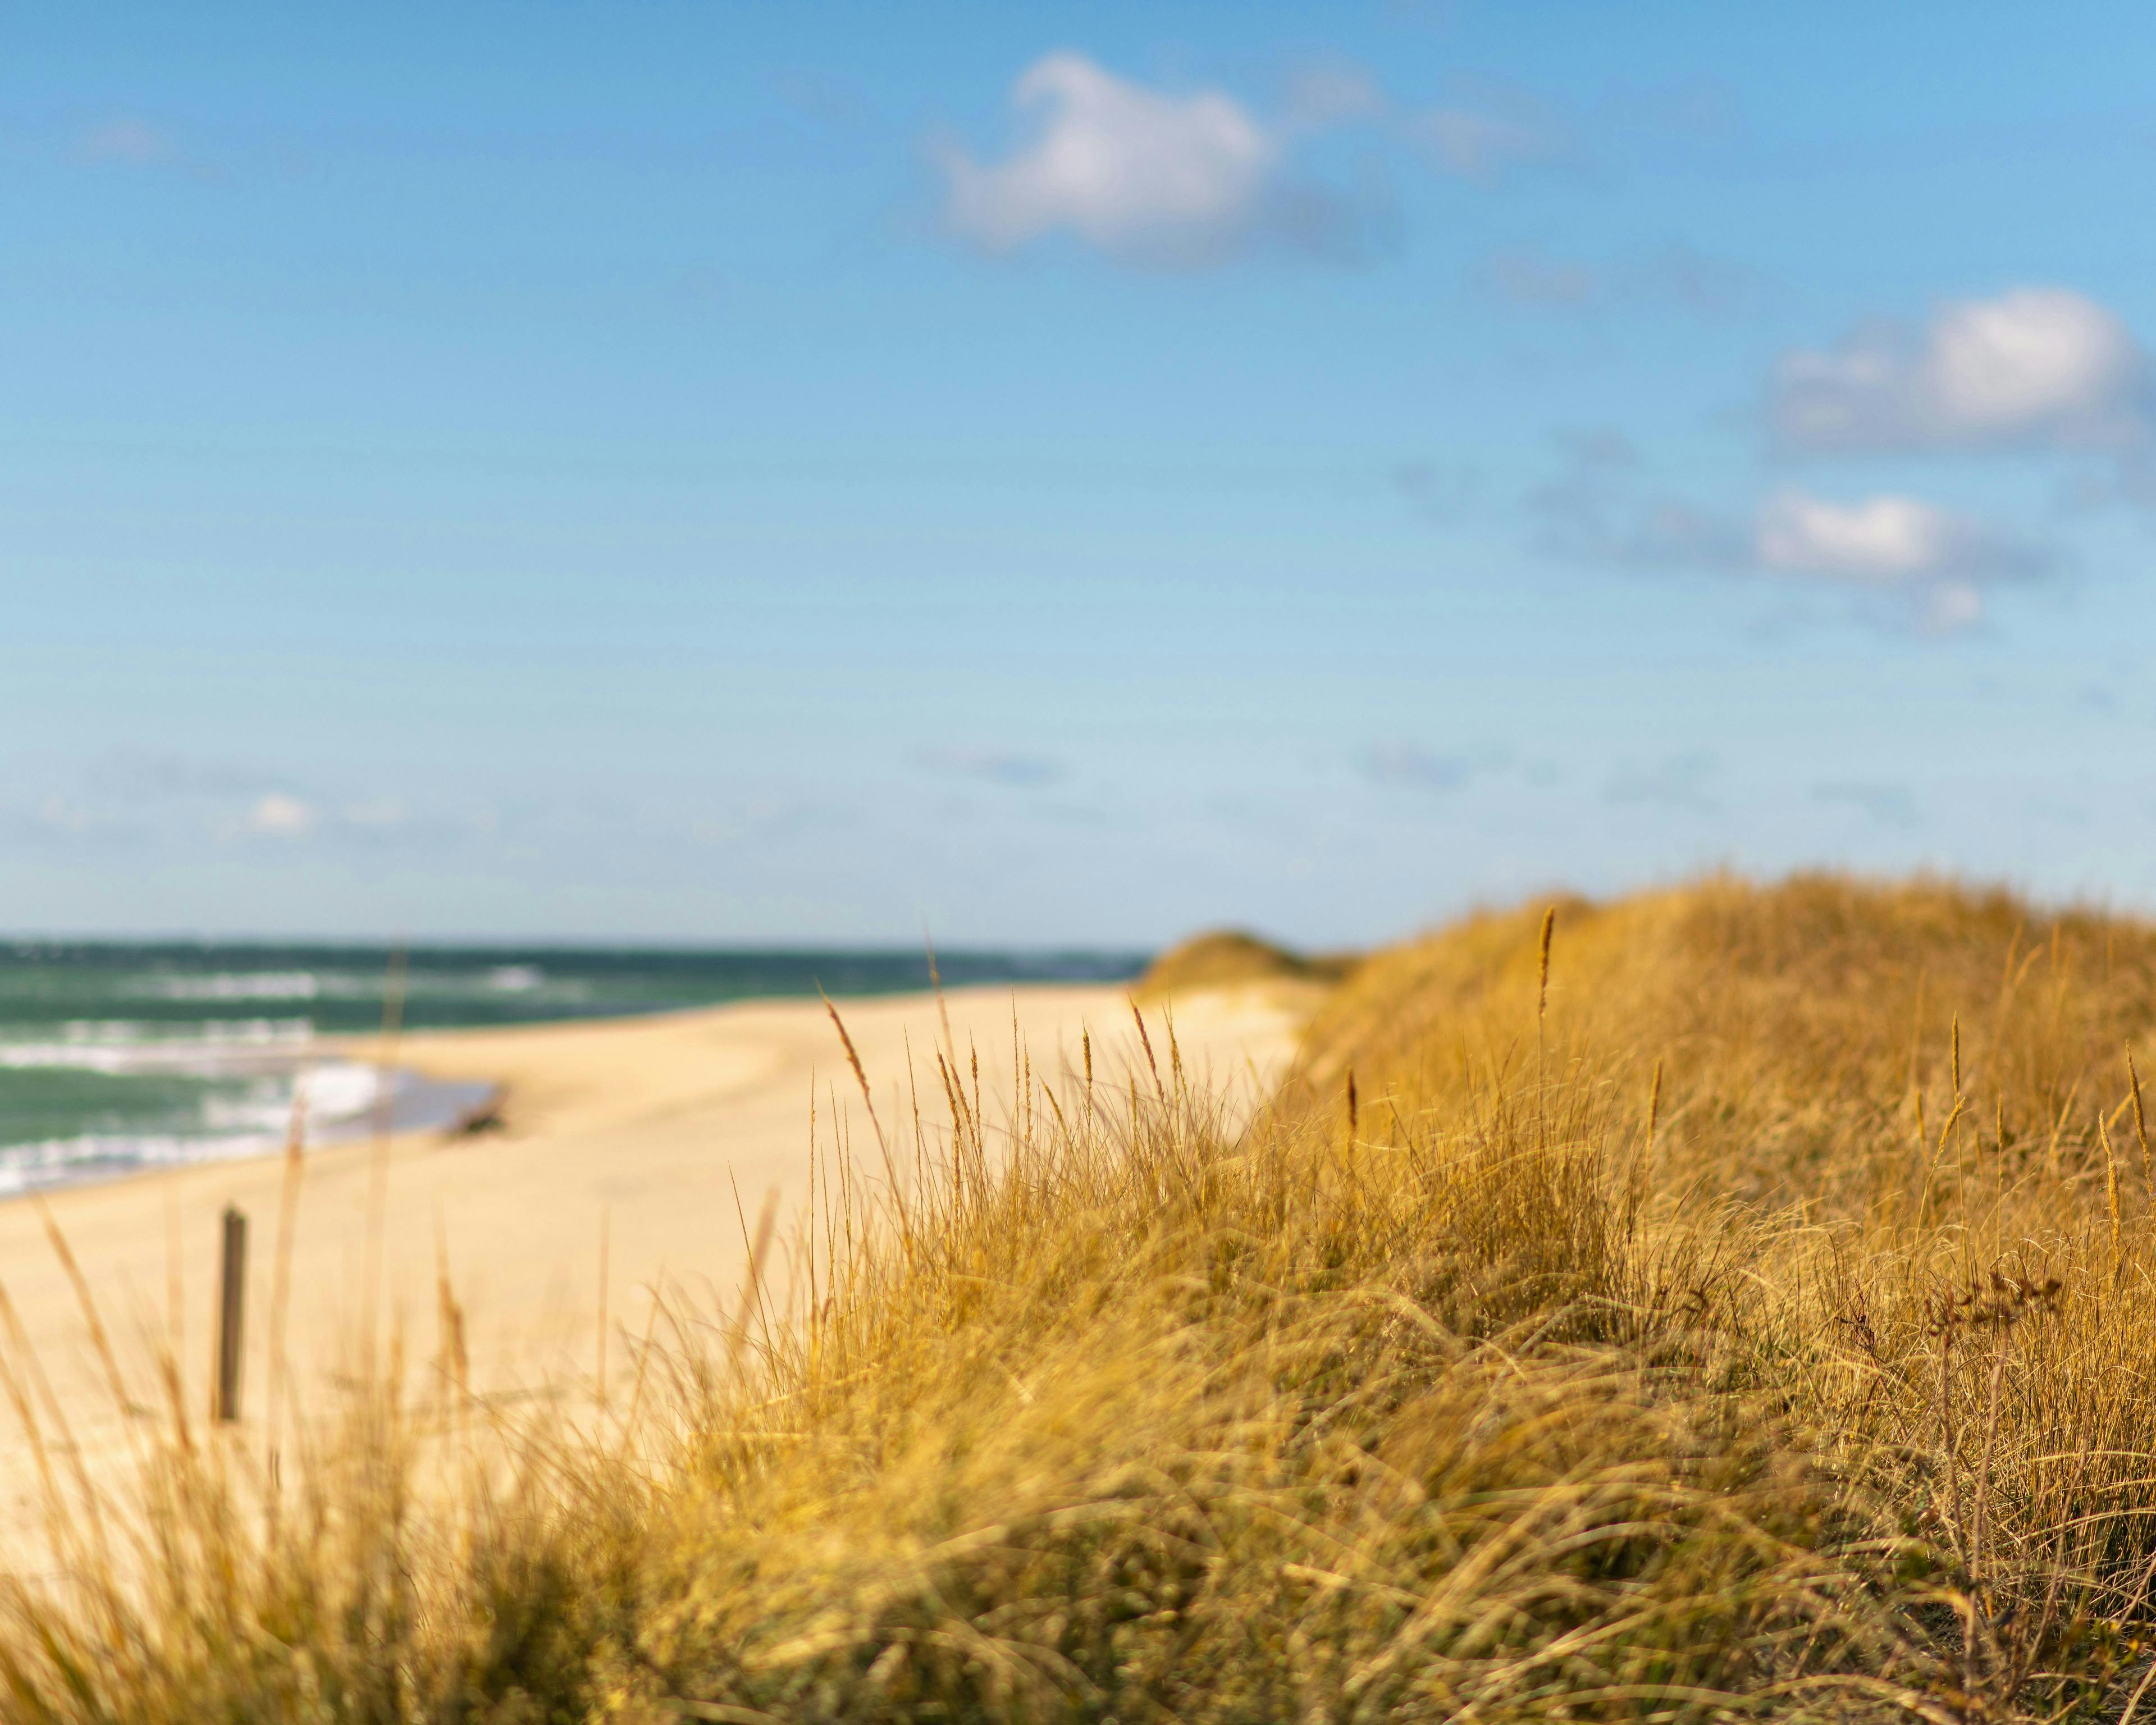 Photograph of a sunny sand dunes on the beach. Photo by Jack Cohen via Unsplash.